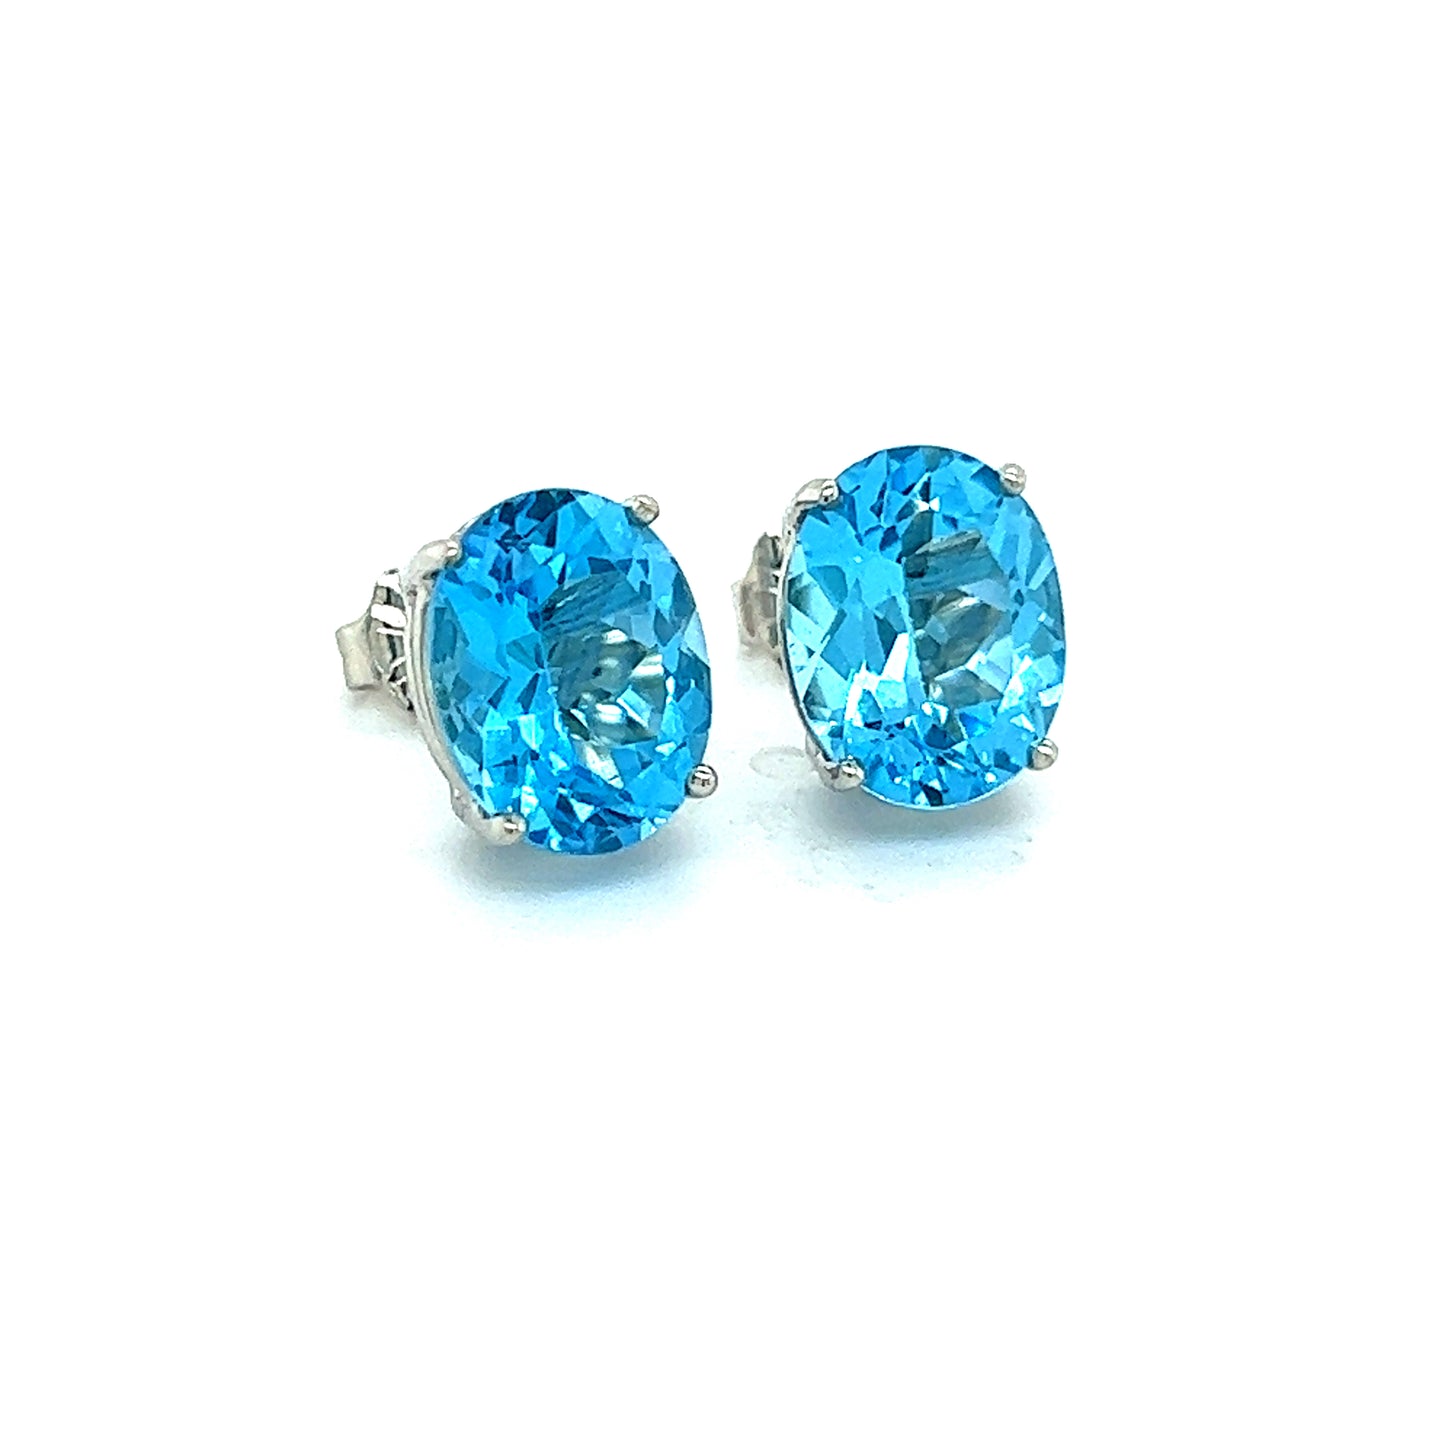 Natural Blue Topaz Stud Earrings 14k White Gold 5.79 TW Certified $599 307906